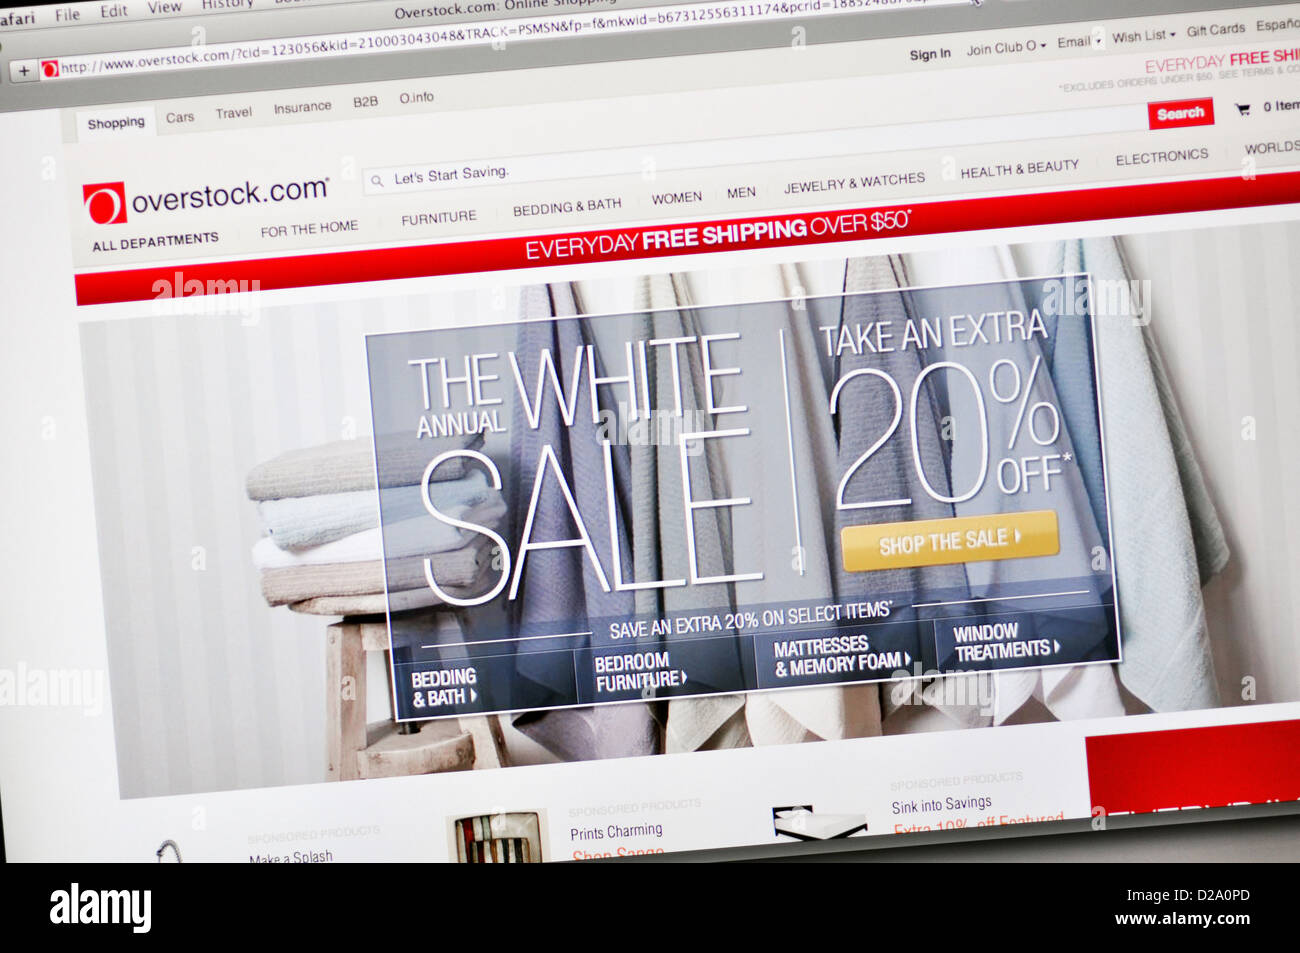 Overstock.com website - online shopping Stock Photo